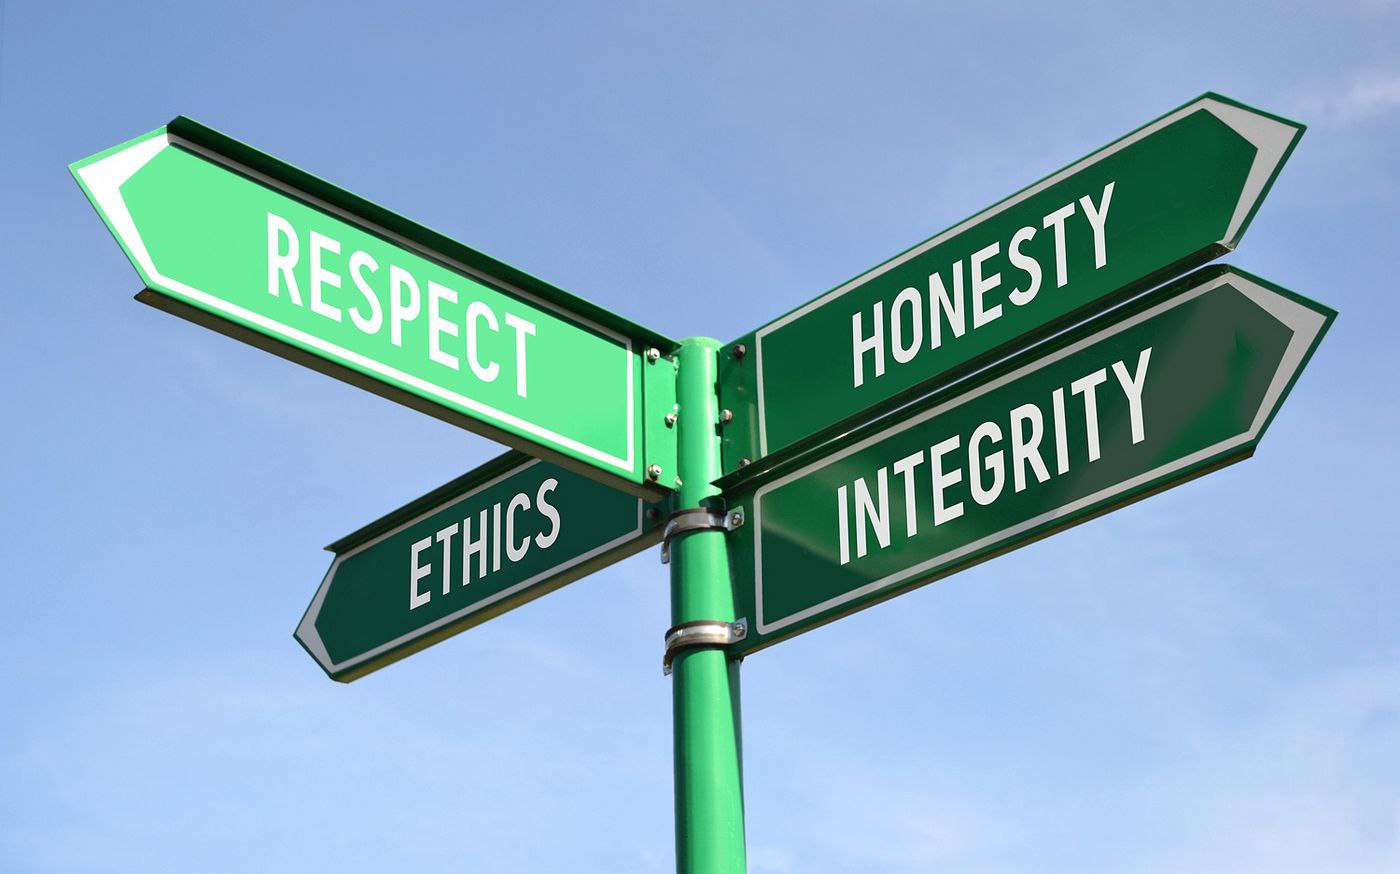 Reflections on Leadership: Faith and Integrity